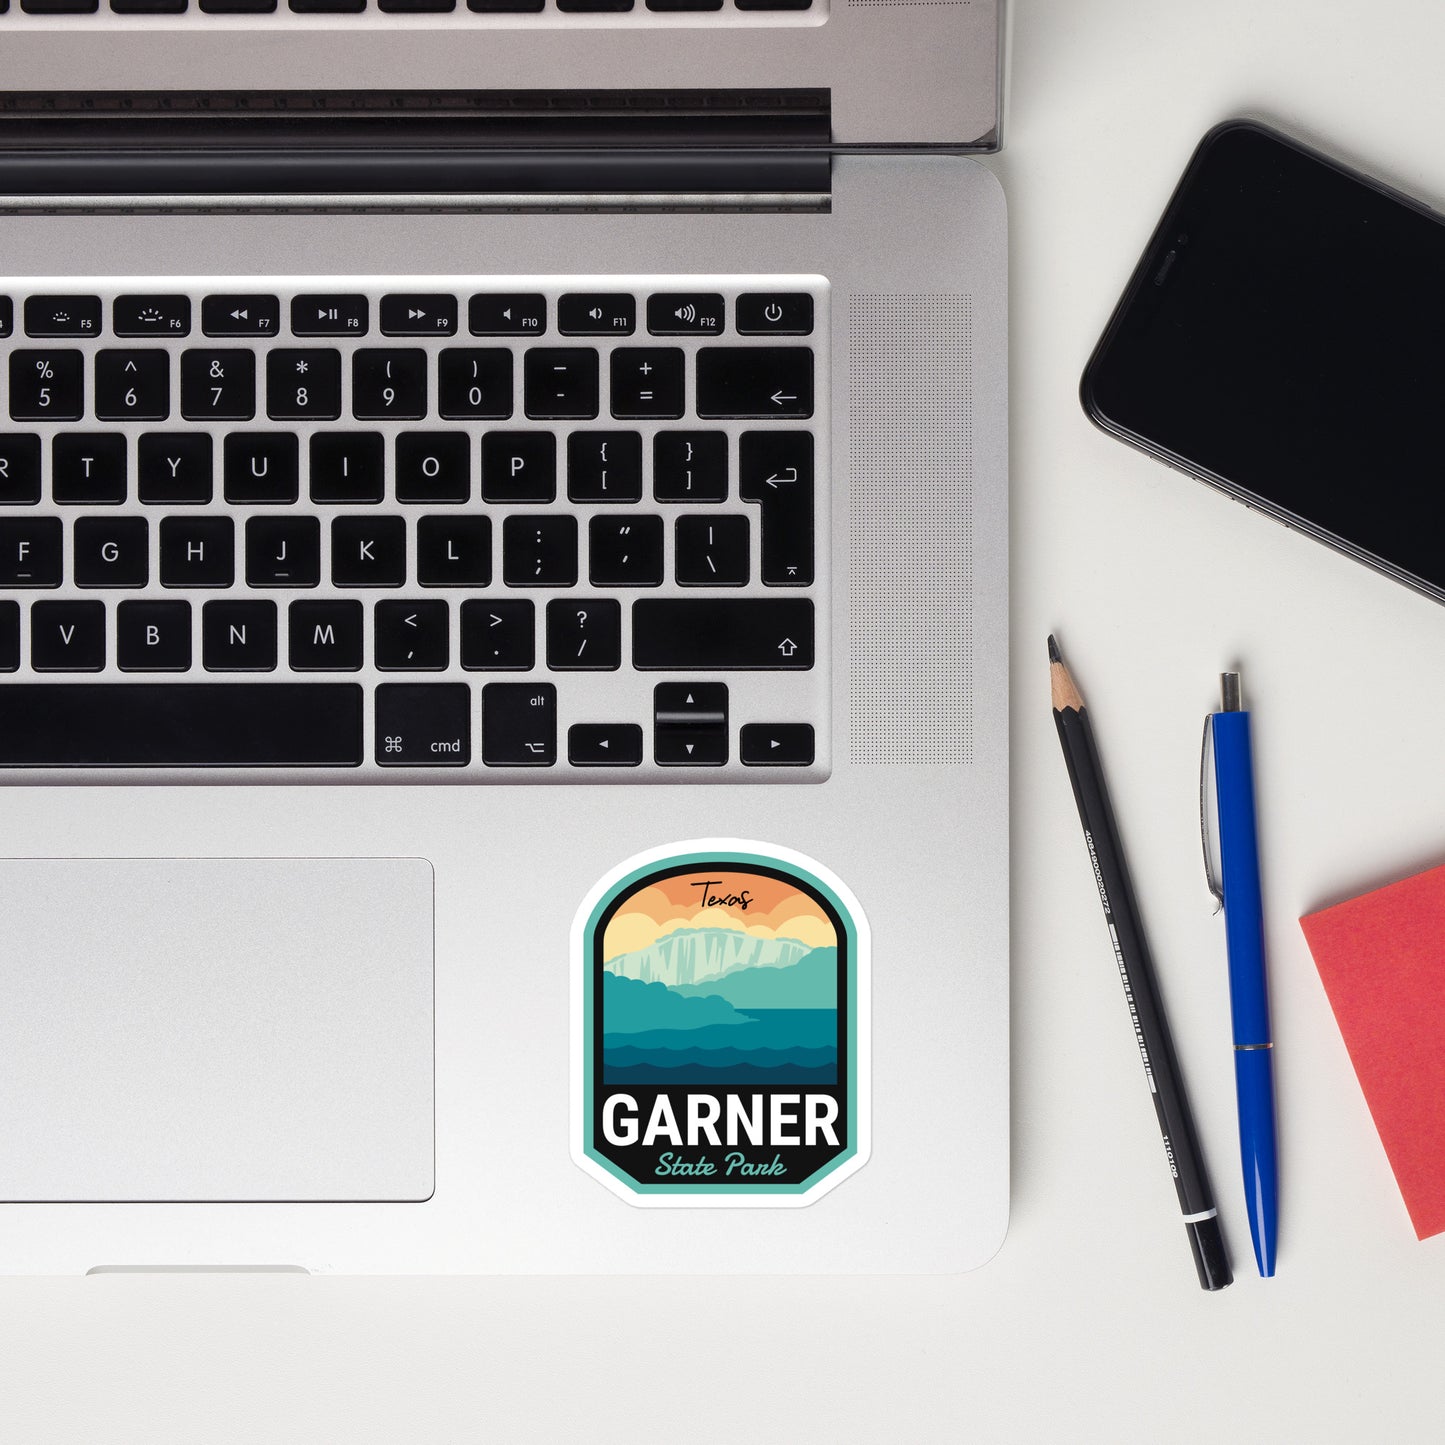 A sticker of Garner State Park on a laptop